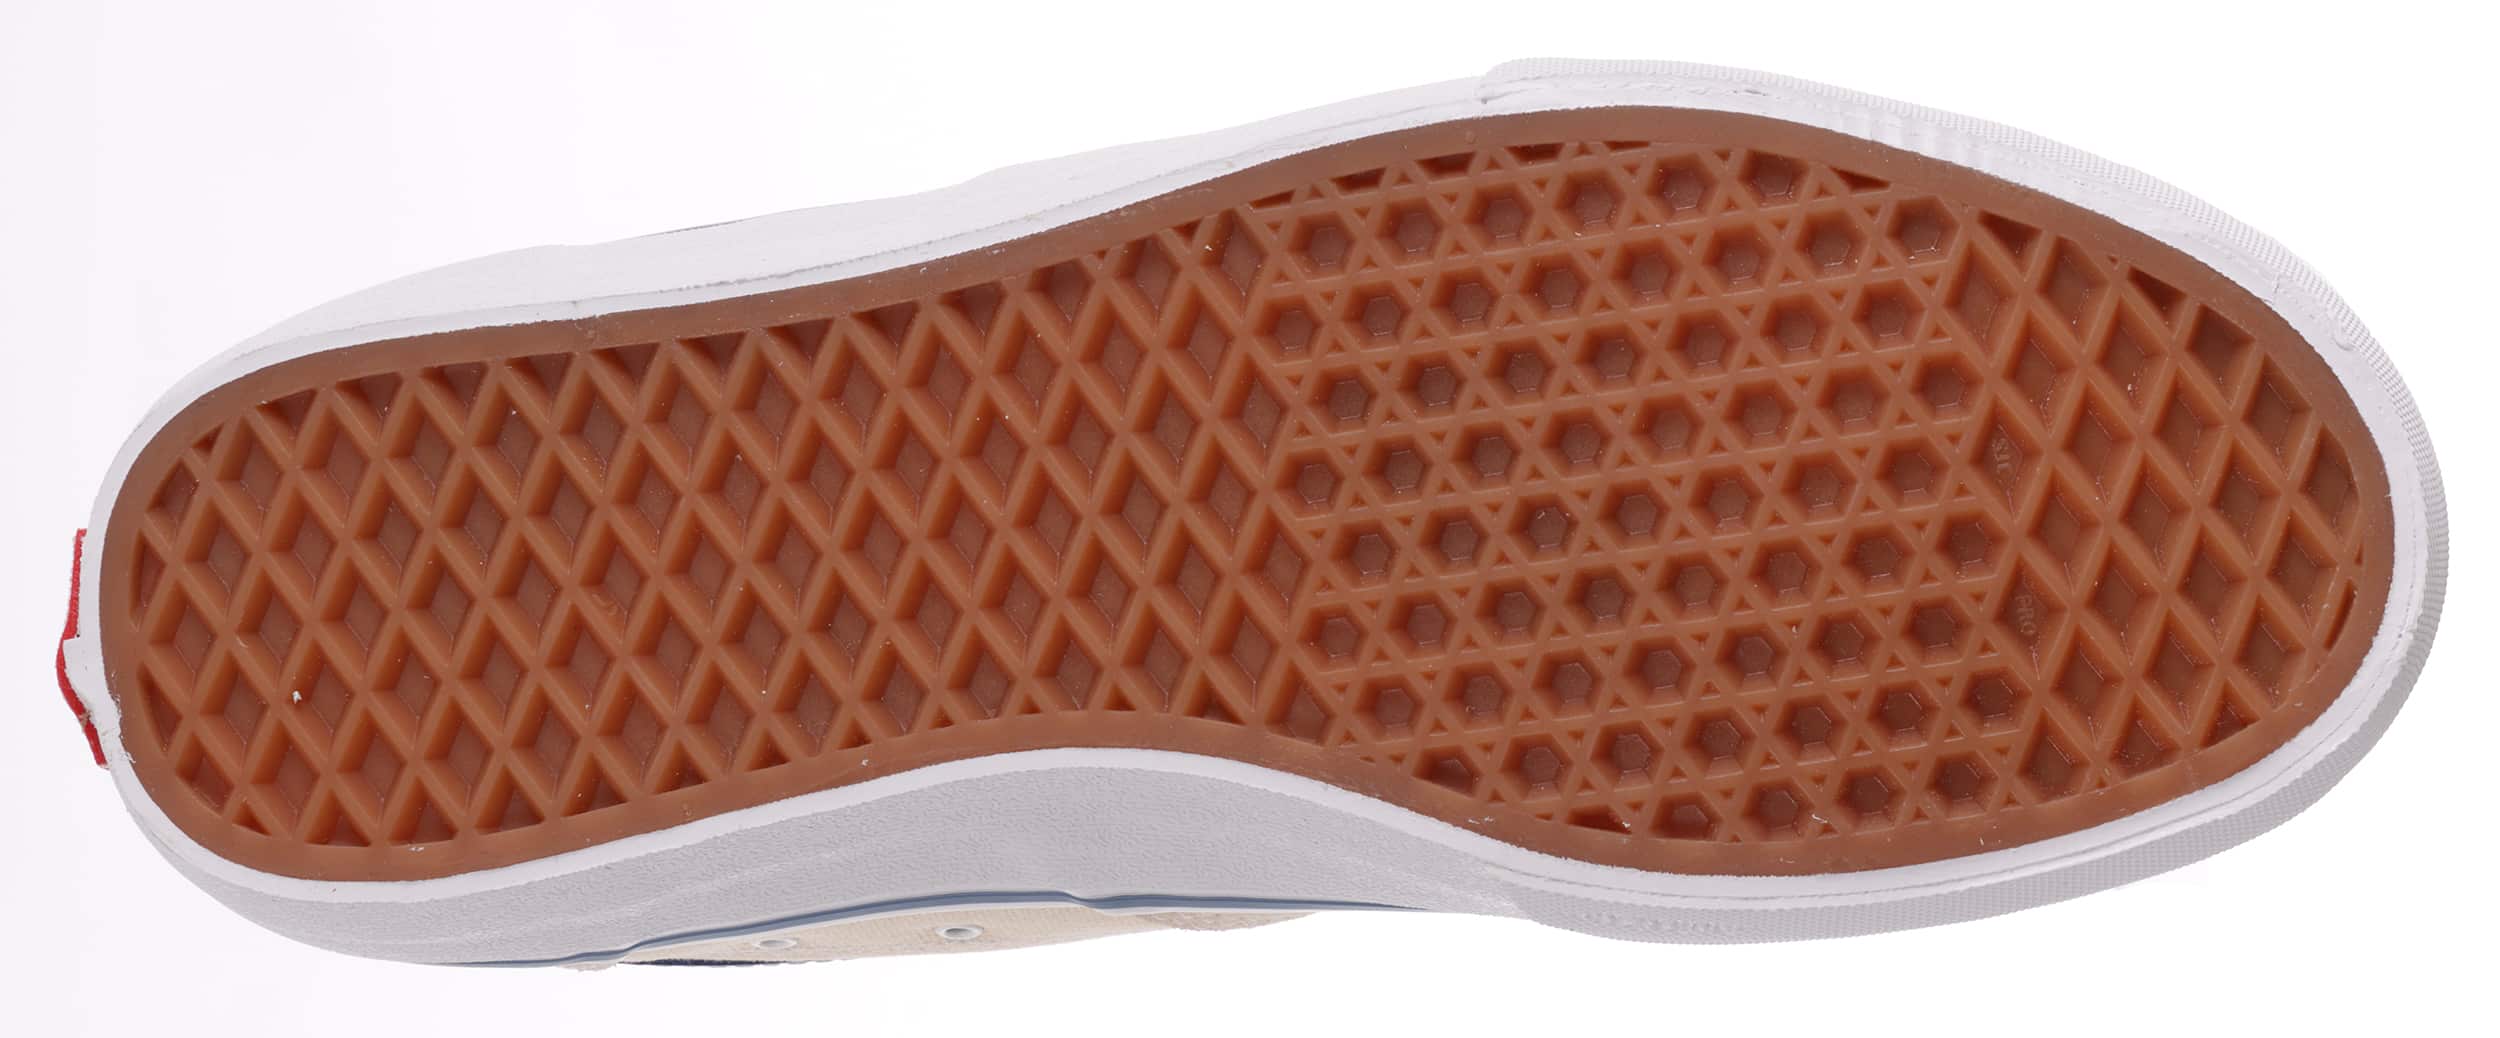 Vans Rowan Pro Skate Shoes - cream/light navy | Tactics